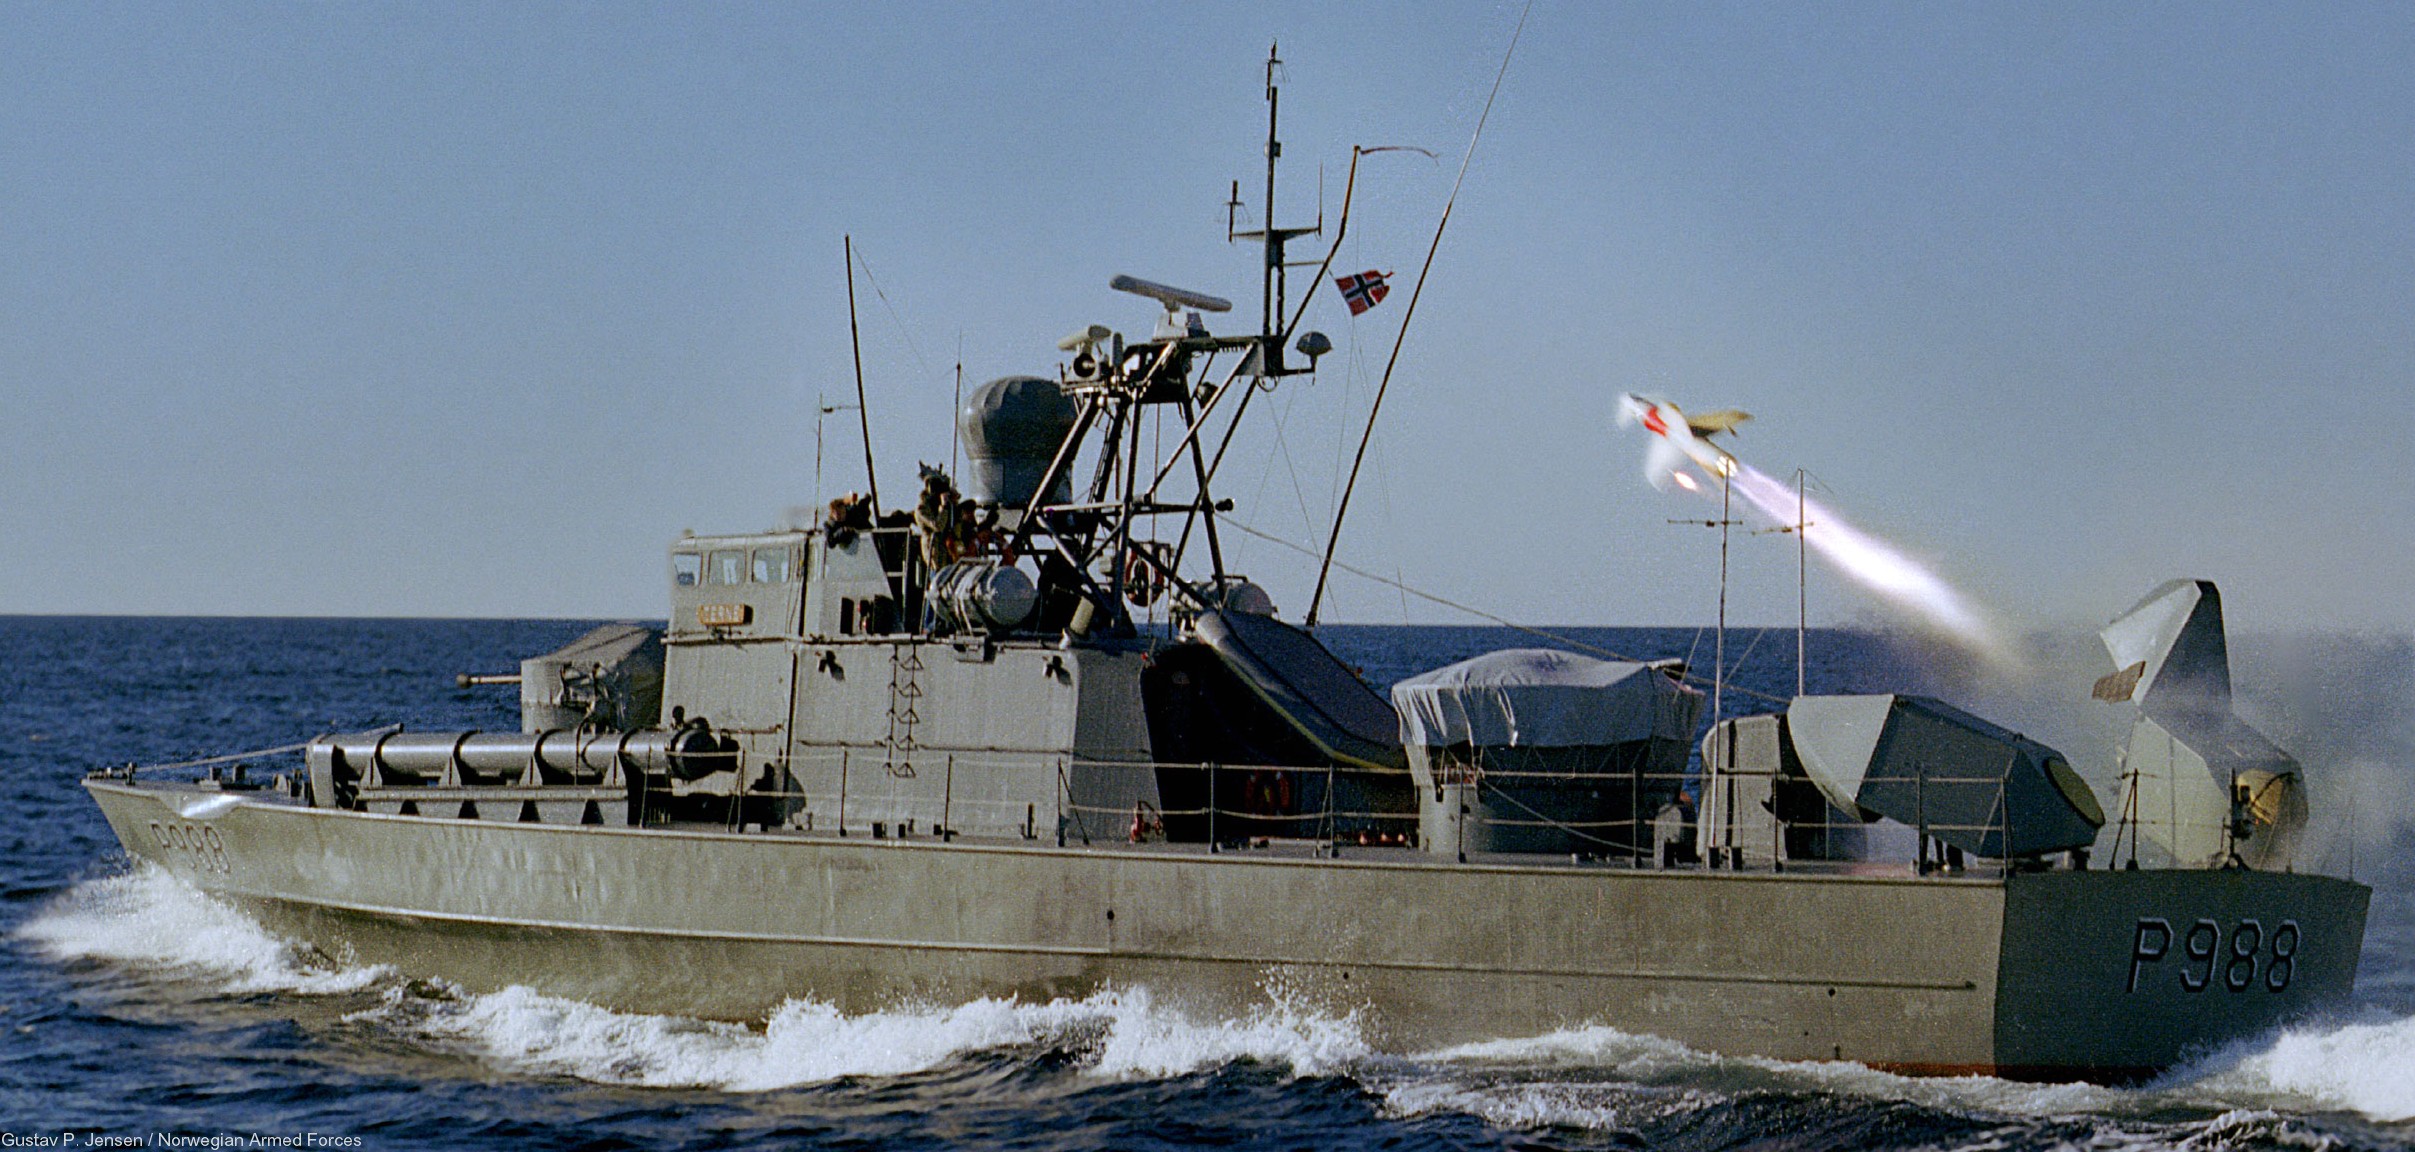 p-988 knm terne hauk class fast attack missile torpedo craft boat norwegian navy sjøforsvaret 21 agm-114 penguin ssm